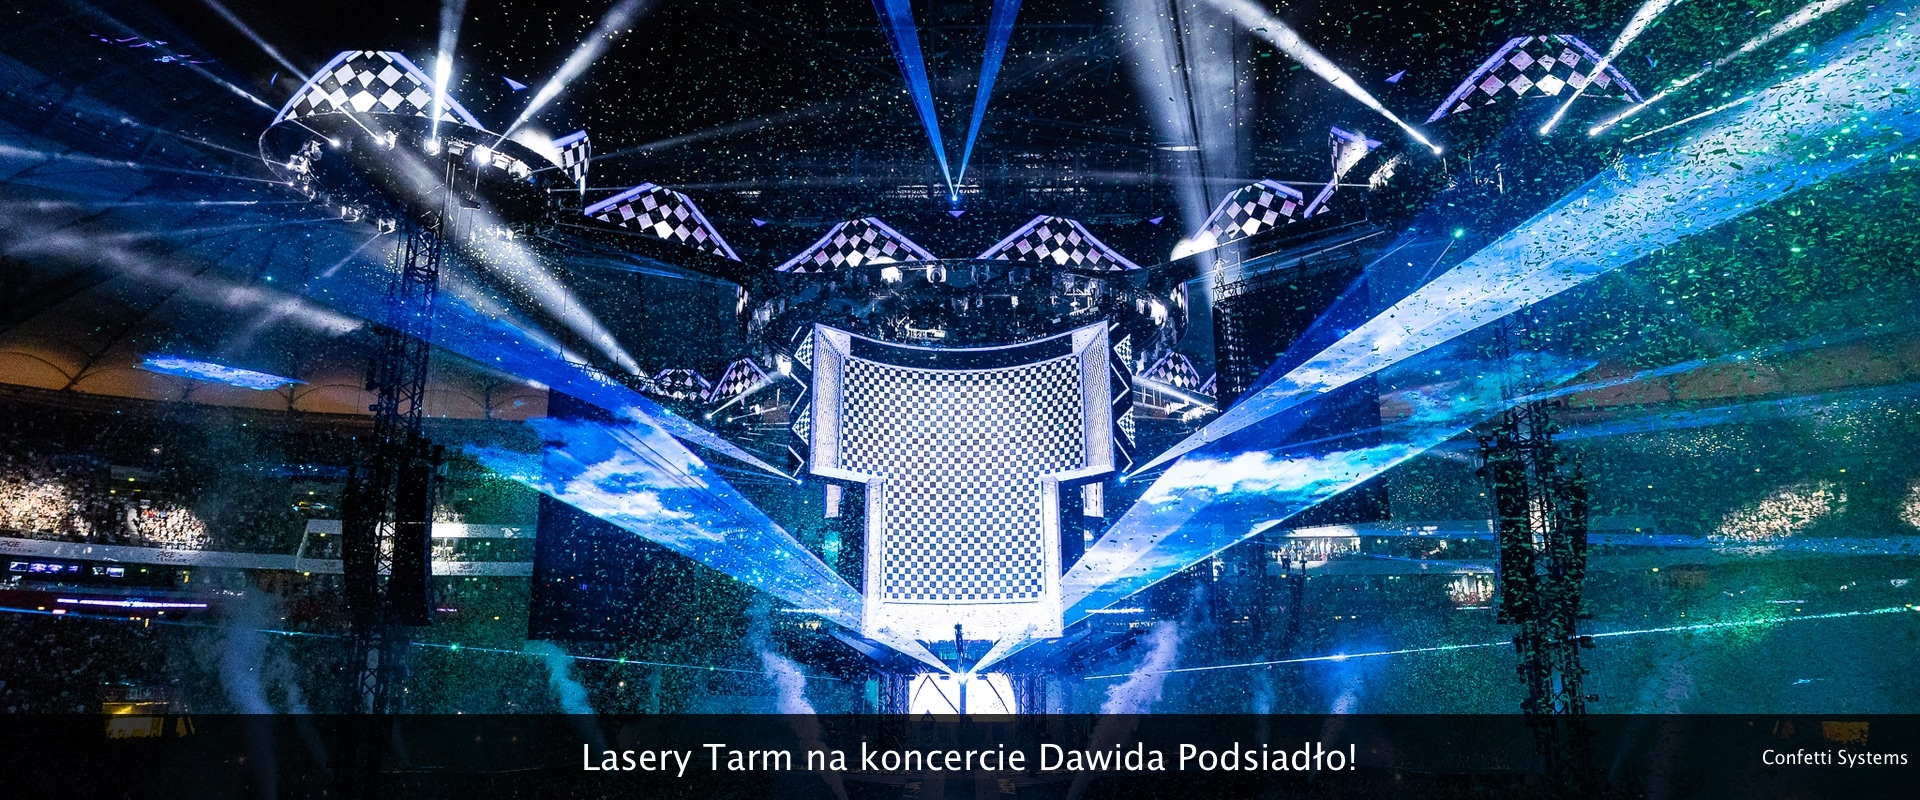 Laserworld Tarm Dawid Podsiadlo